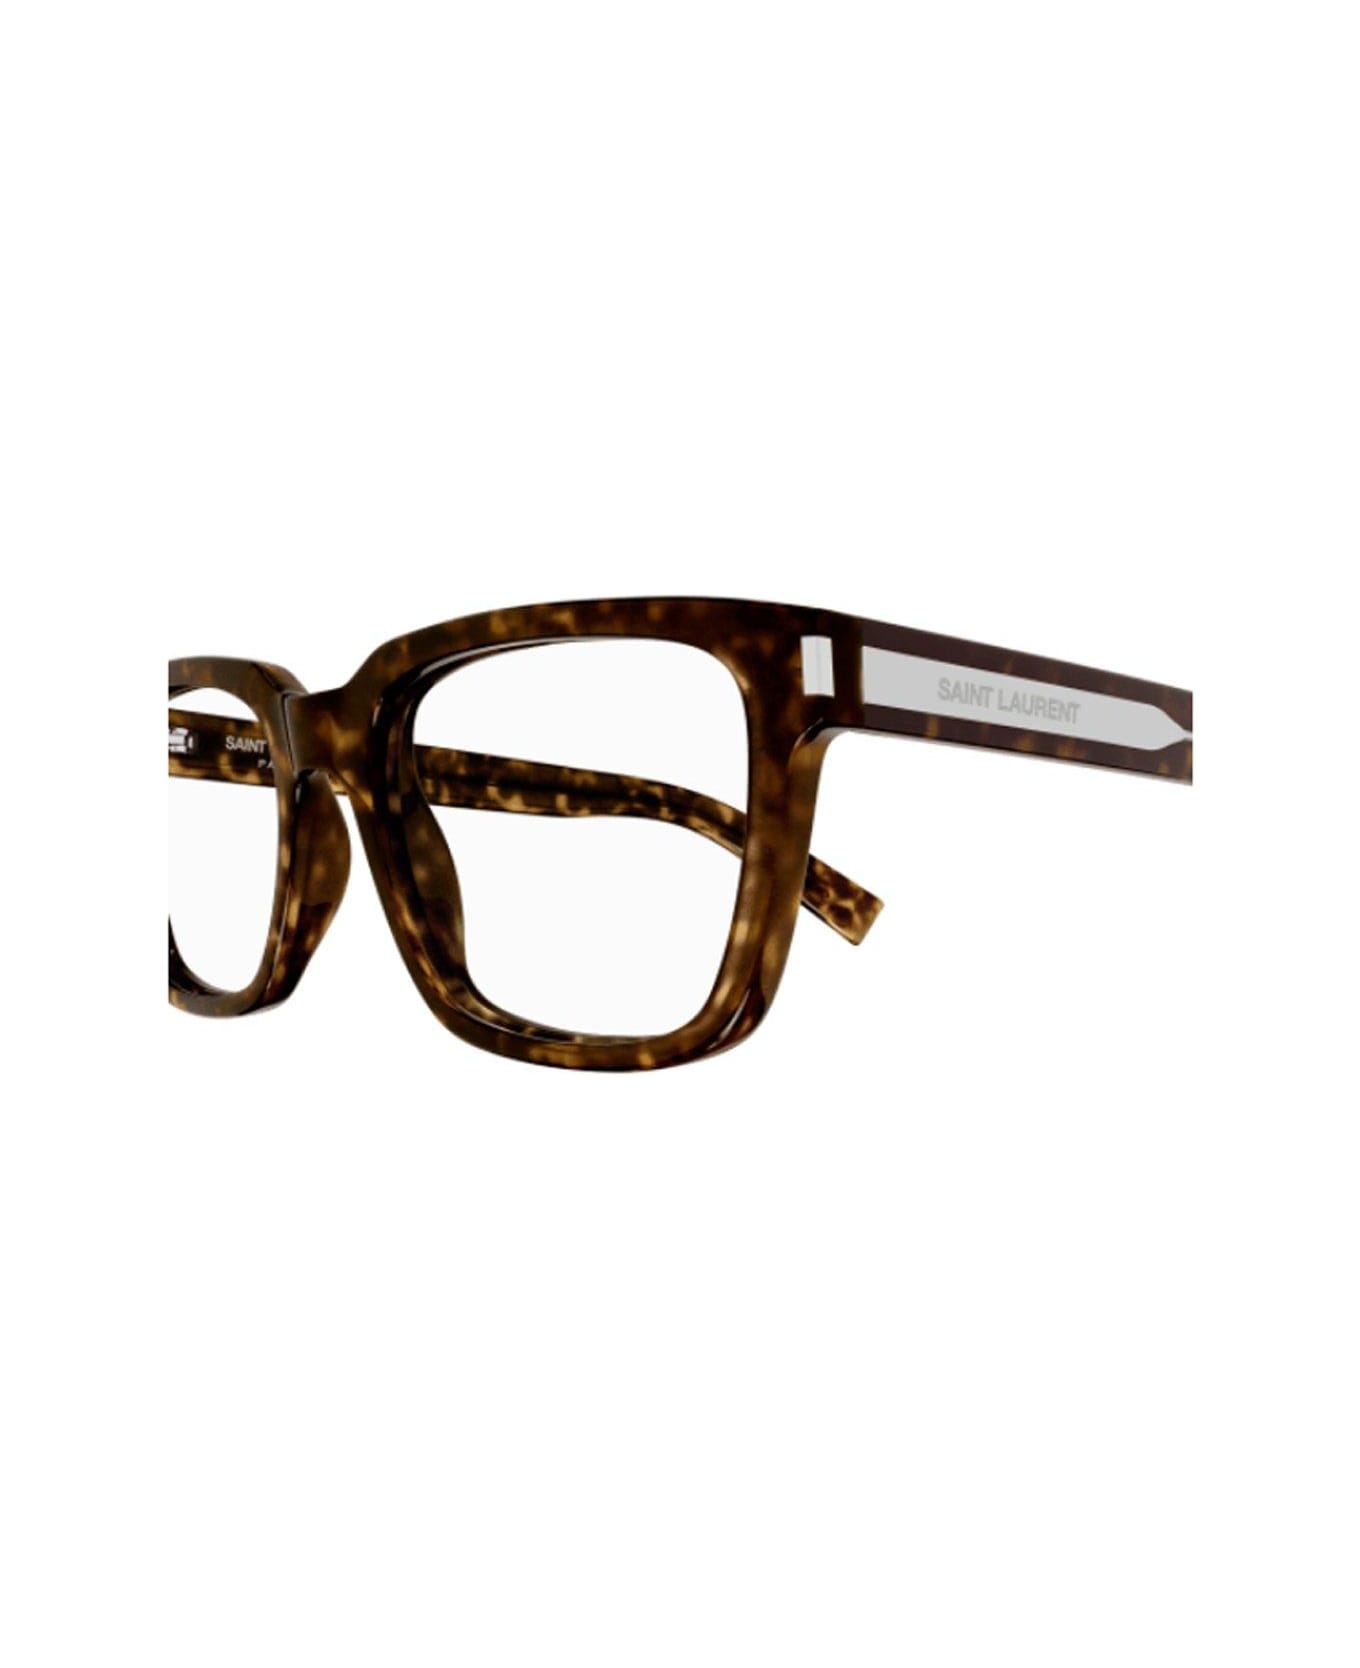 Saint Laurent Eyewear Square Frame Glasses - 002 havana crystal transp